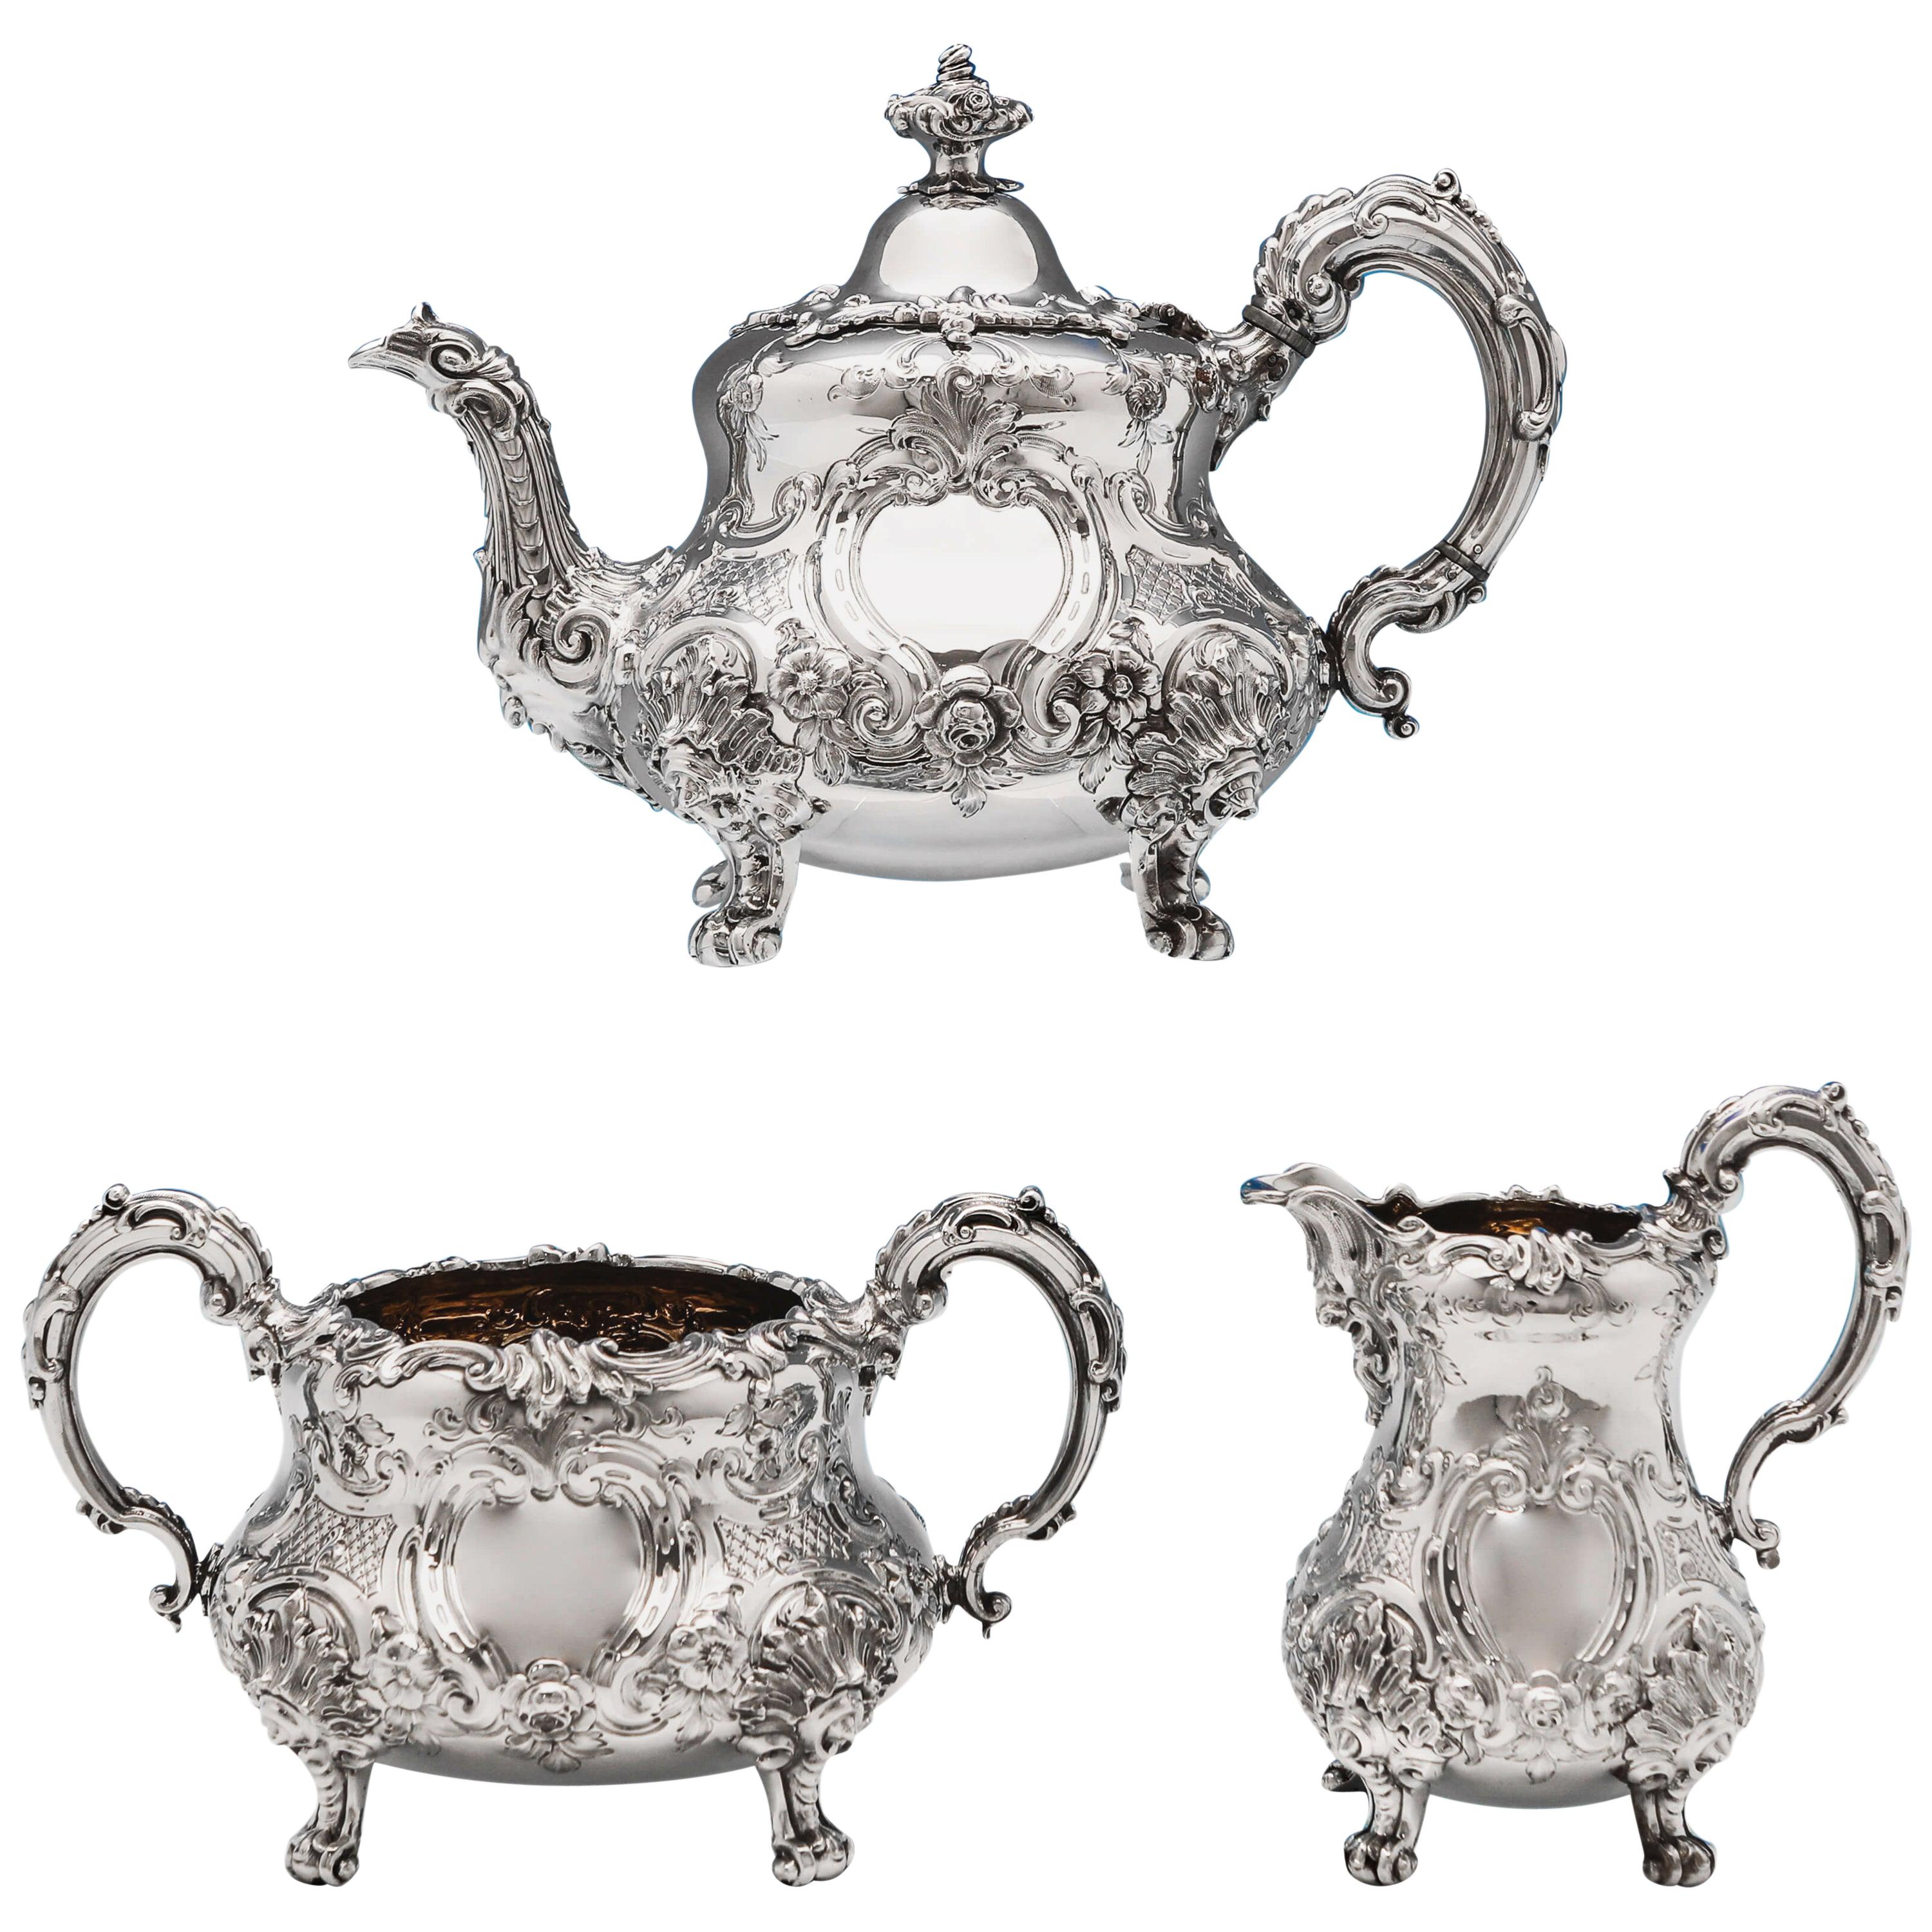 Victorian Ornate Sterling Silver Three-Piece Tea Set by Barnards London, 1855